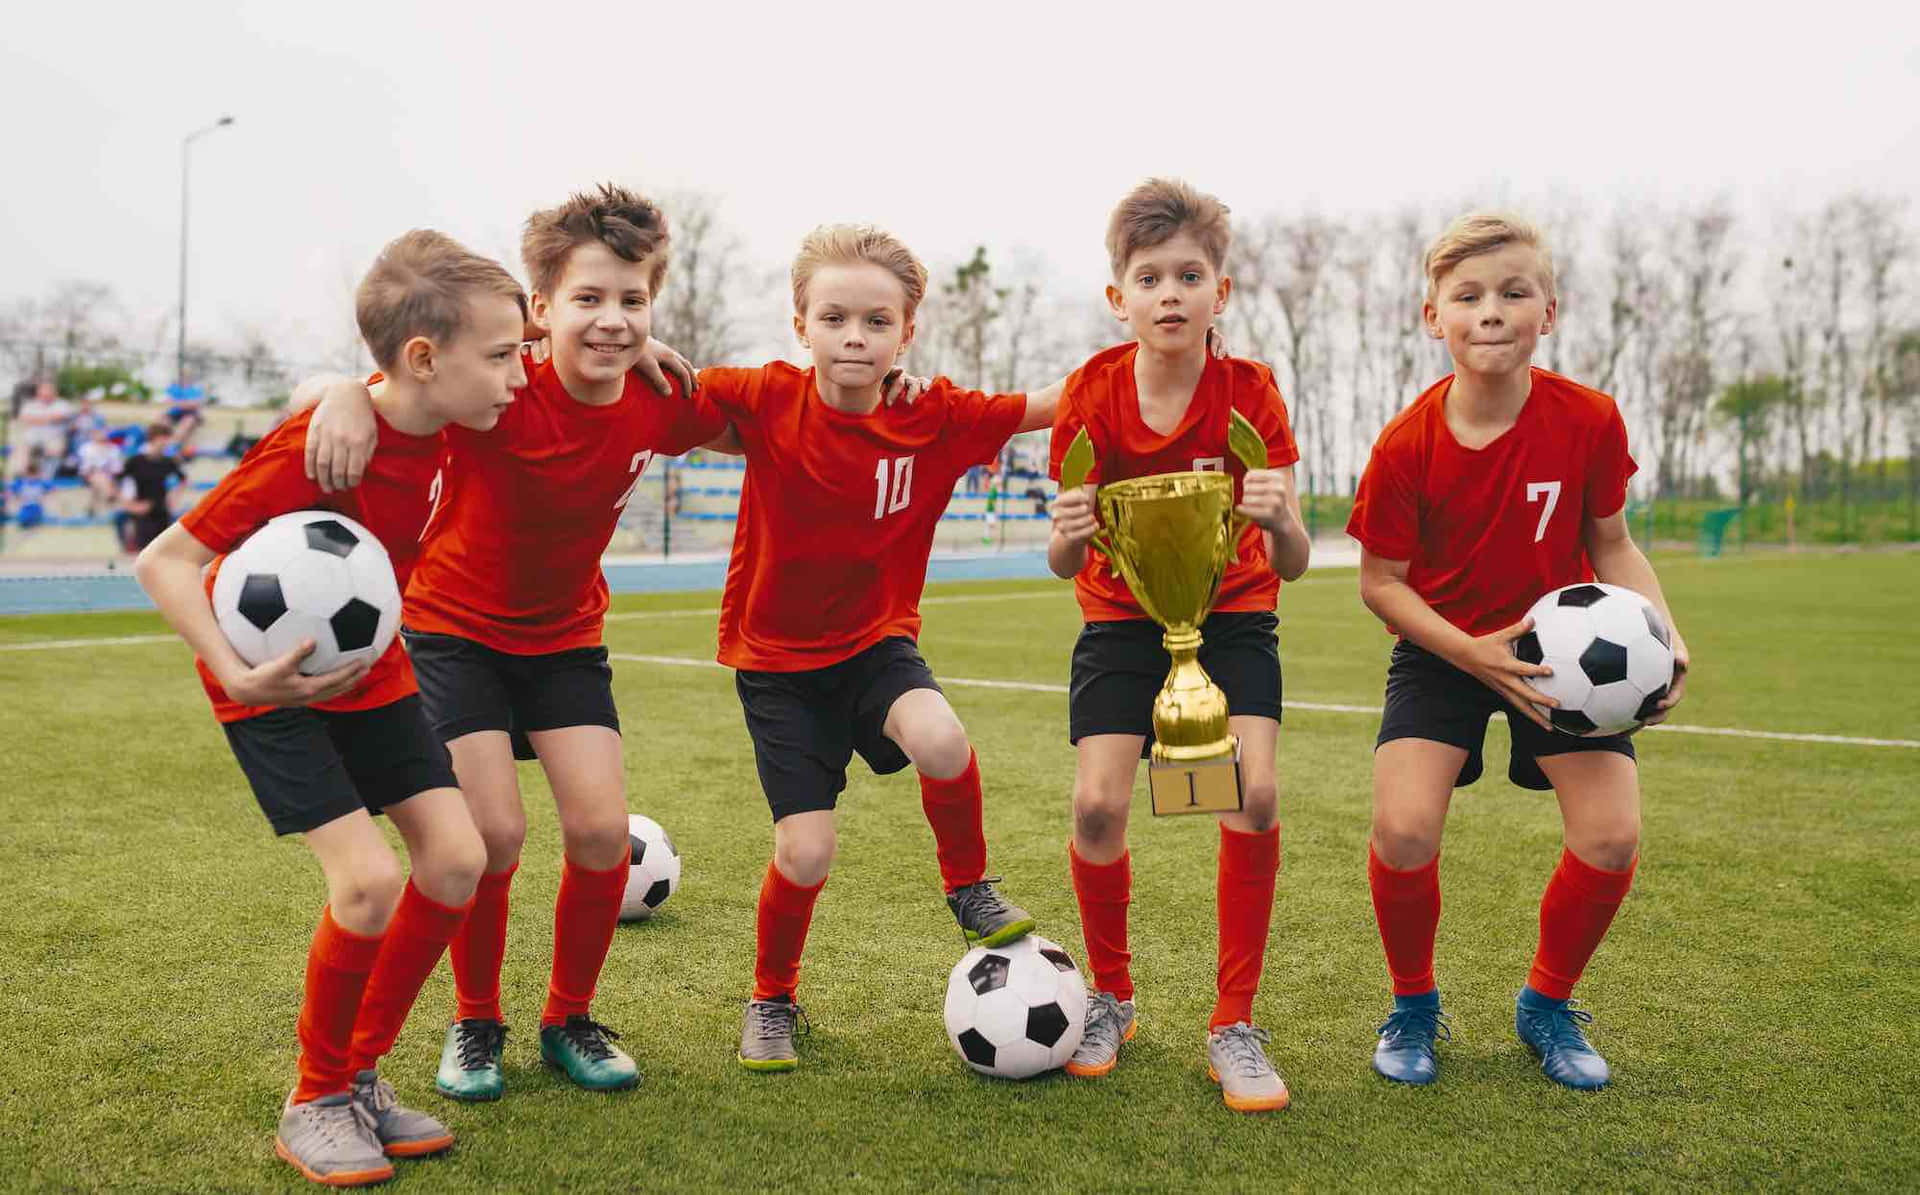 Youth Soccer Team Celebrationwith Trophy.jpg Wallpaper